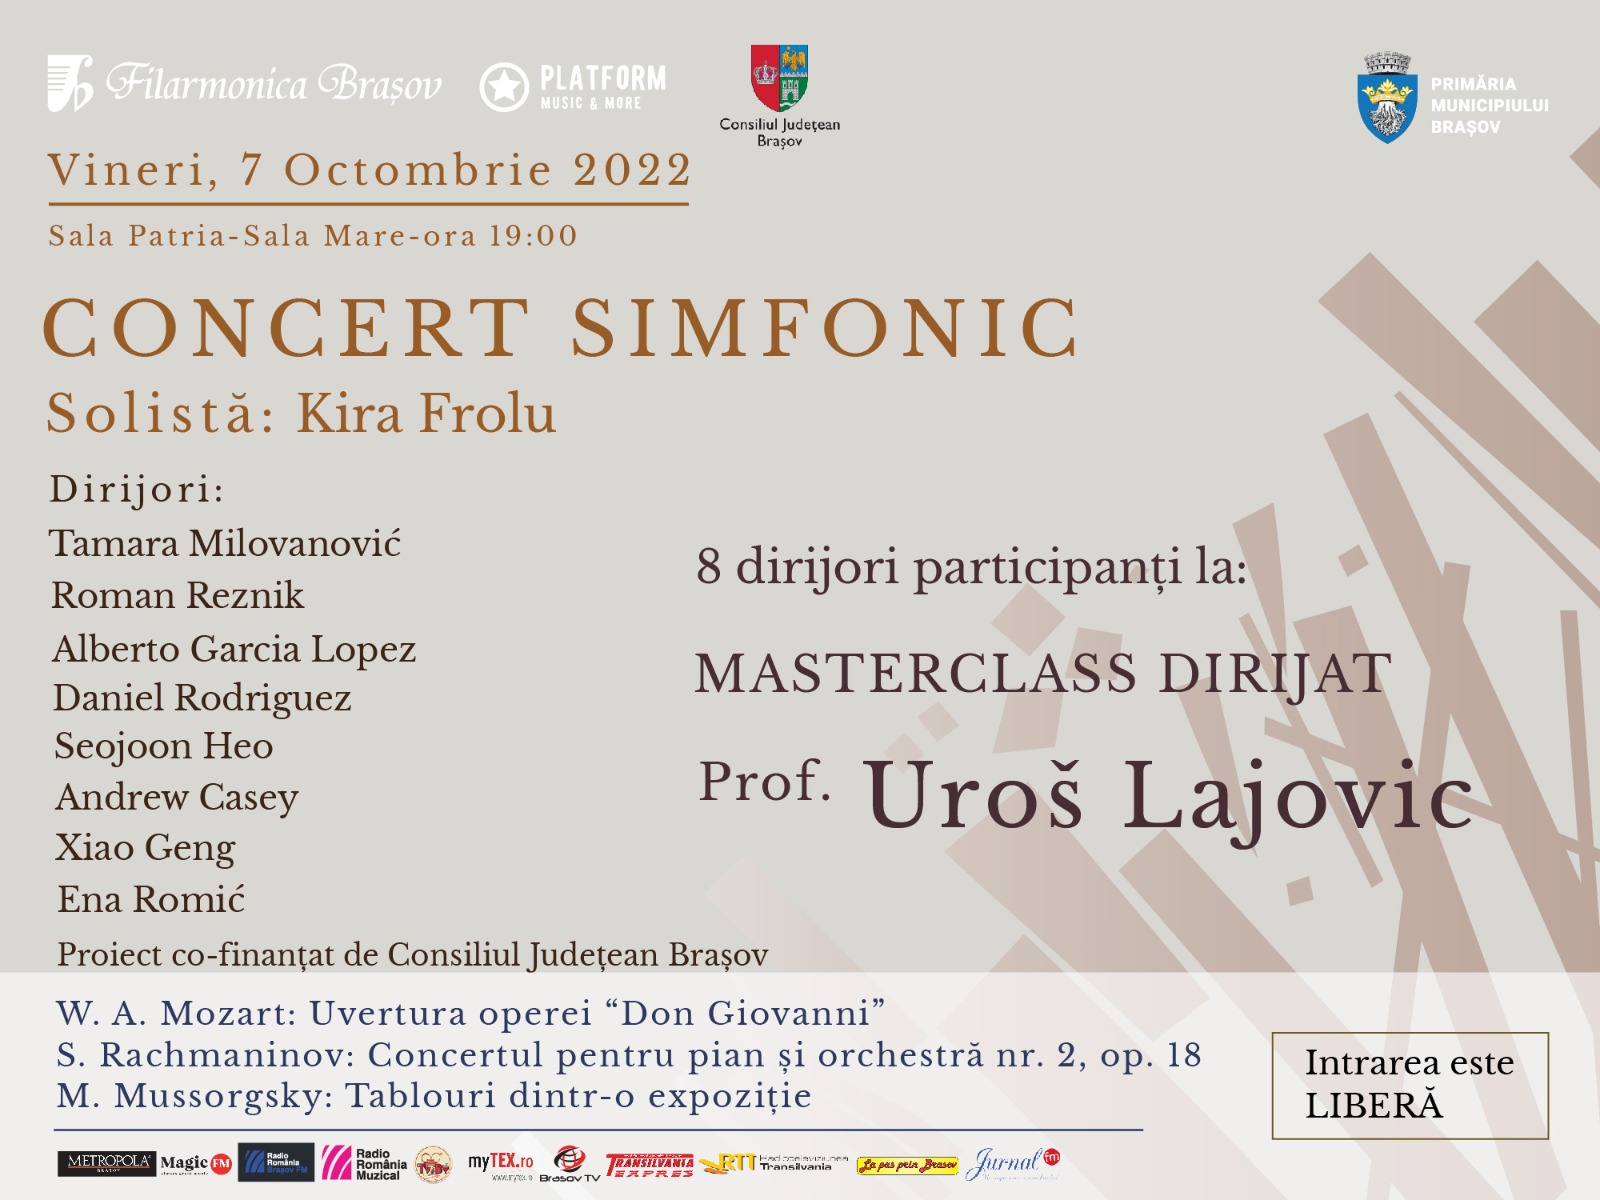 Conducting Masterclass with Uroš Lajovic at the Philharmonic of Brasov